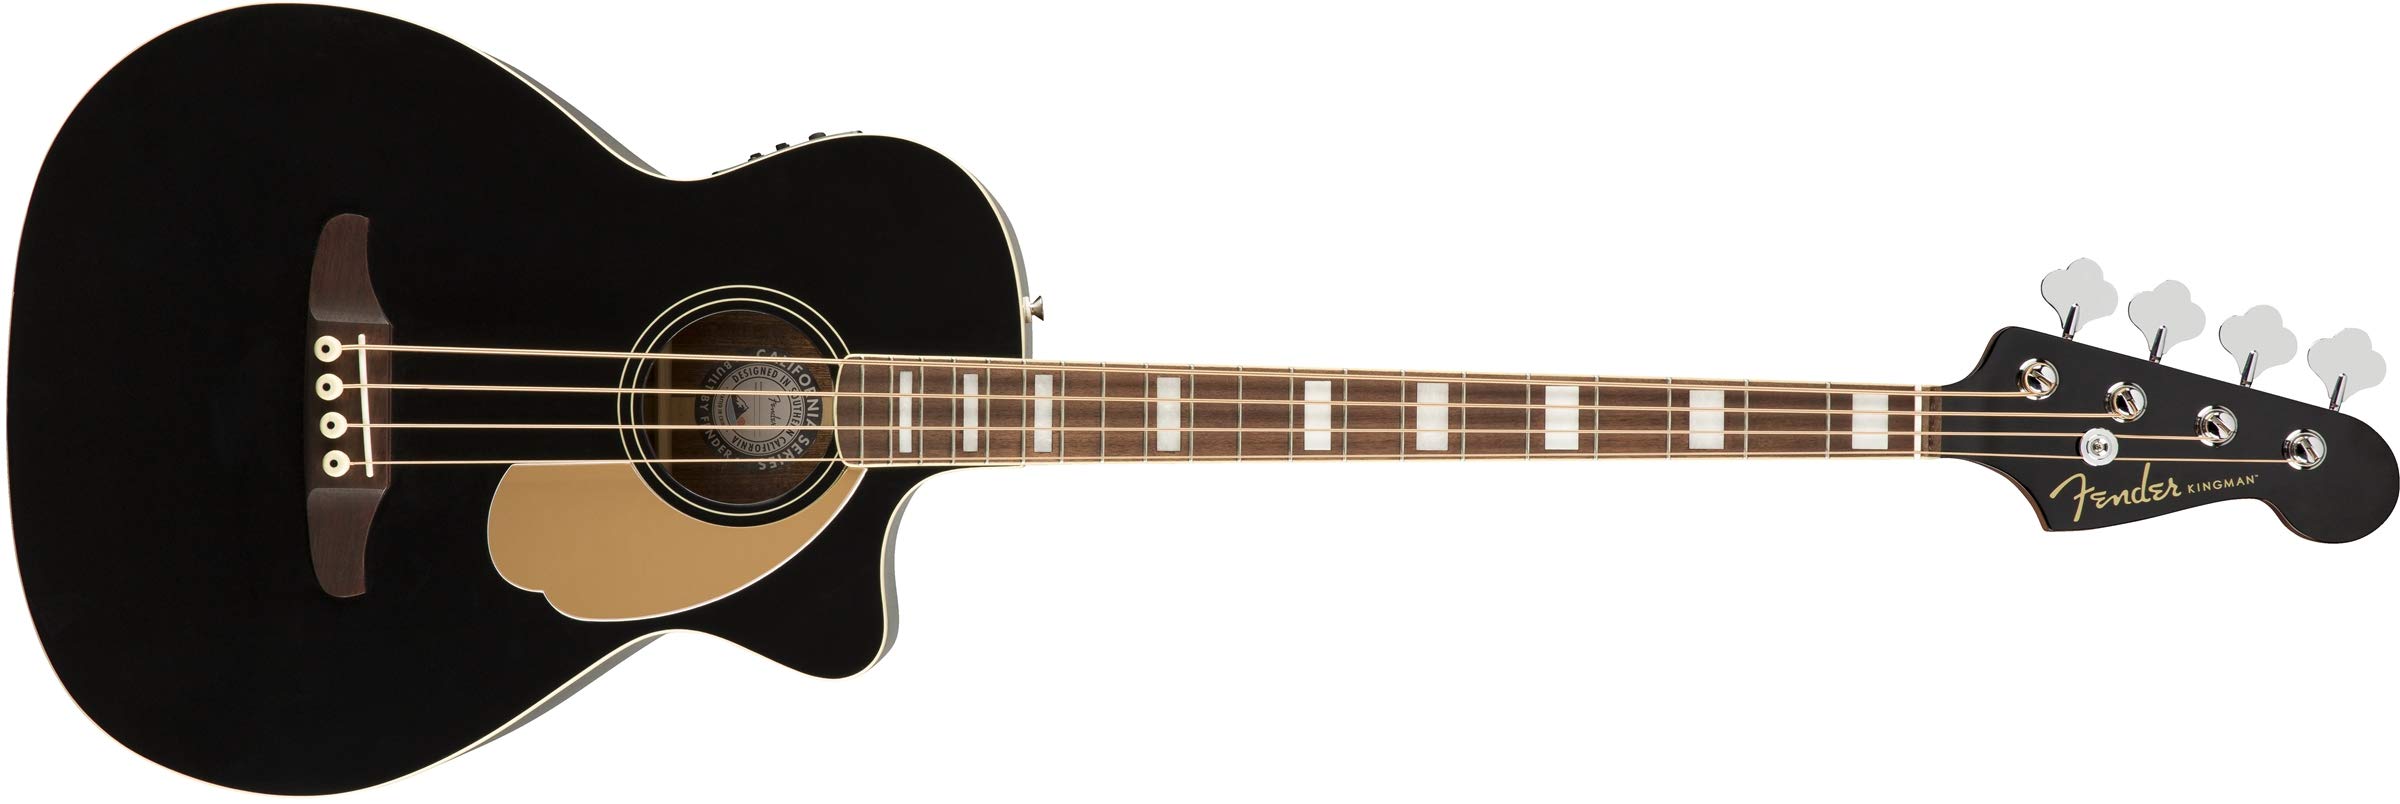 Fender Kingman 어쿠스틱 베이스 기타(V2) - 블랙 - 가방 포함 - 월넛 지판...